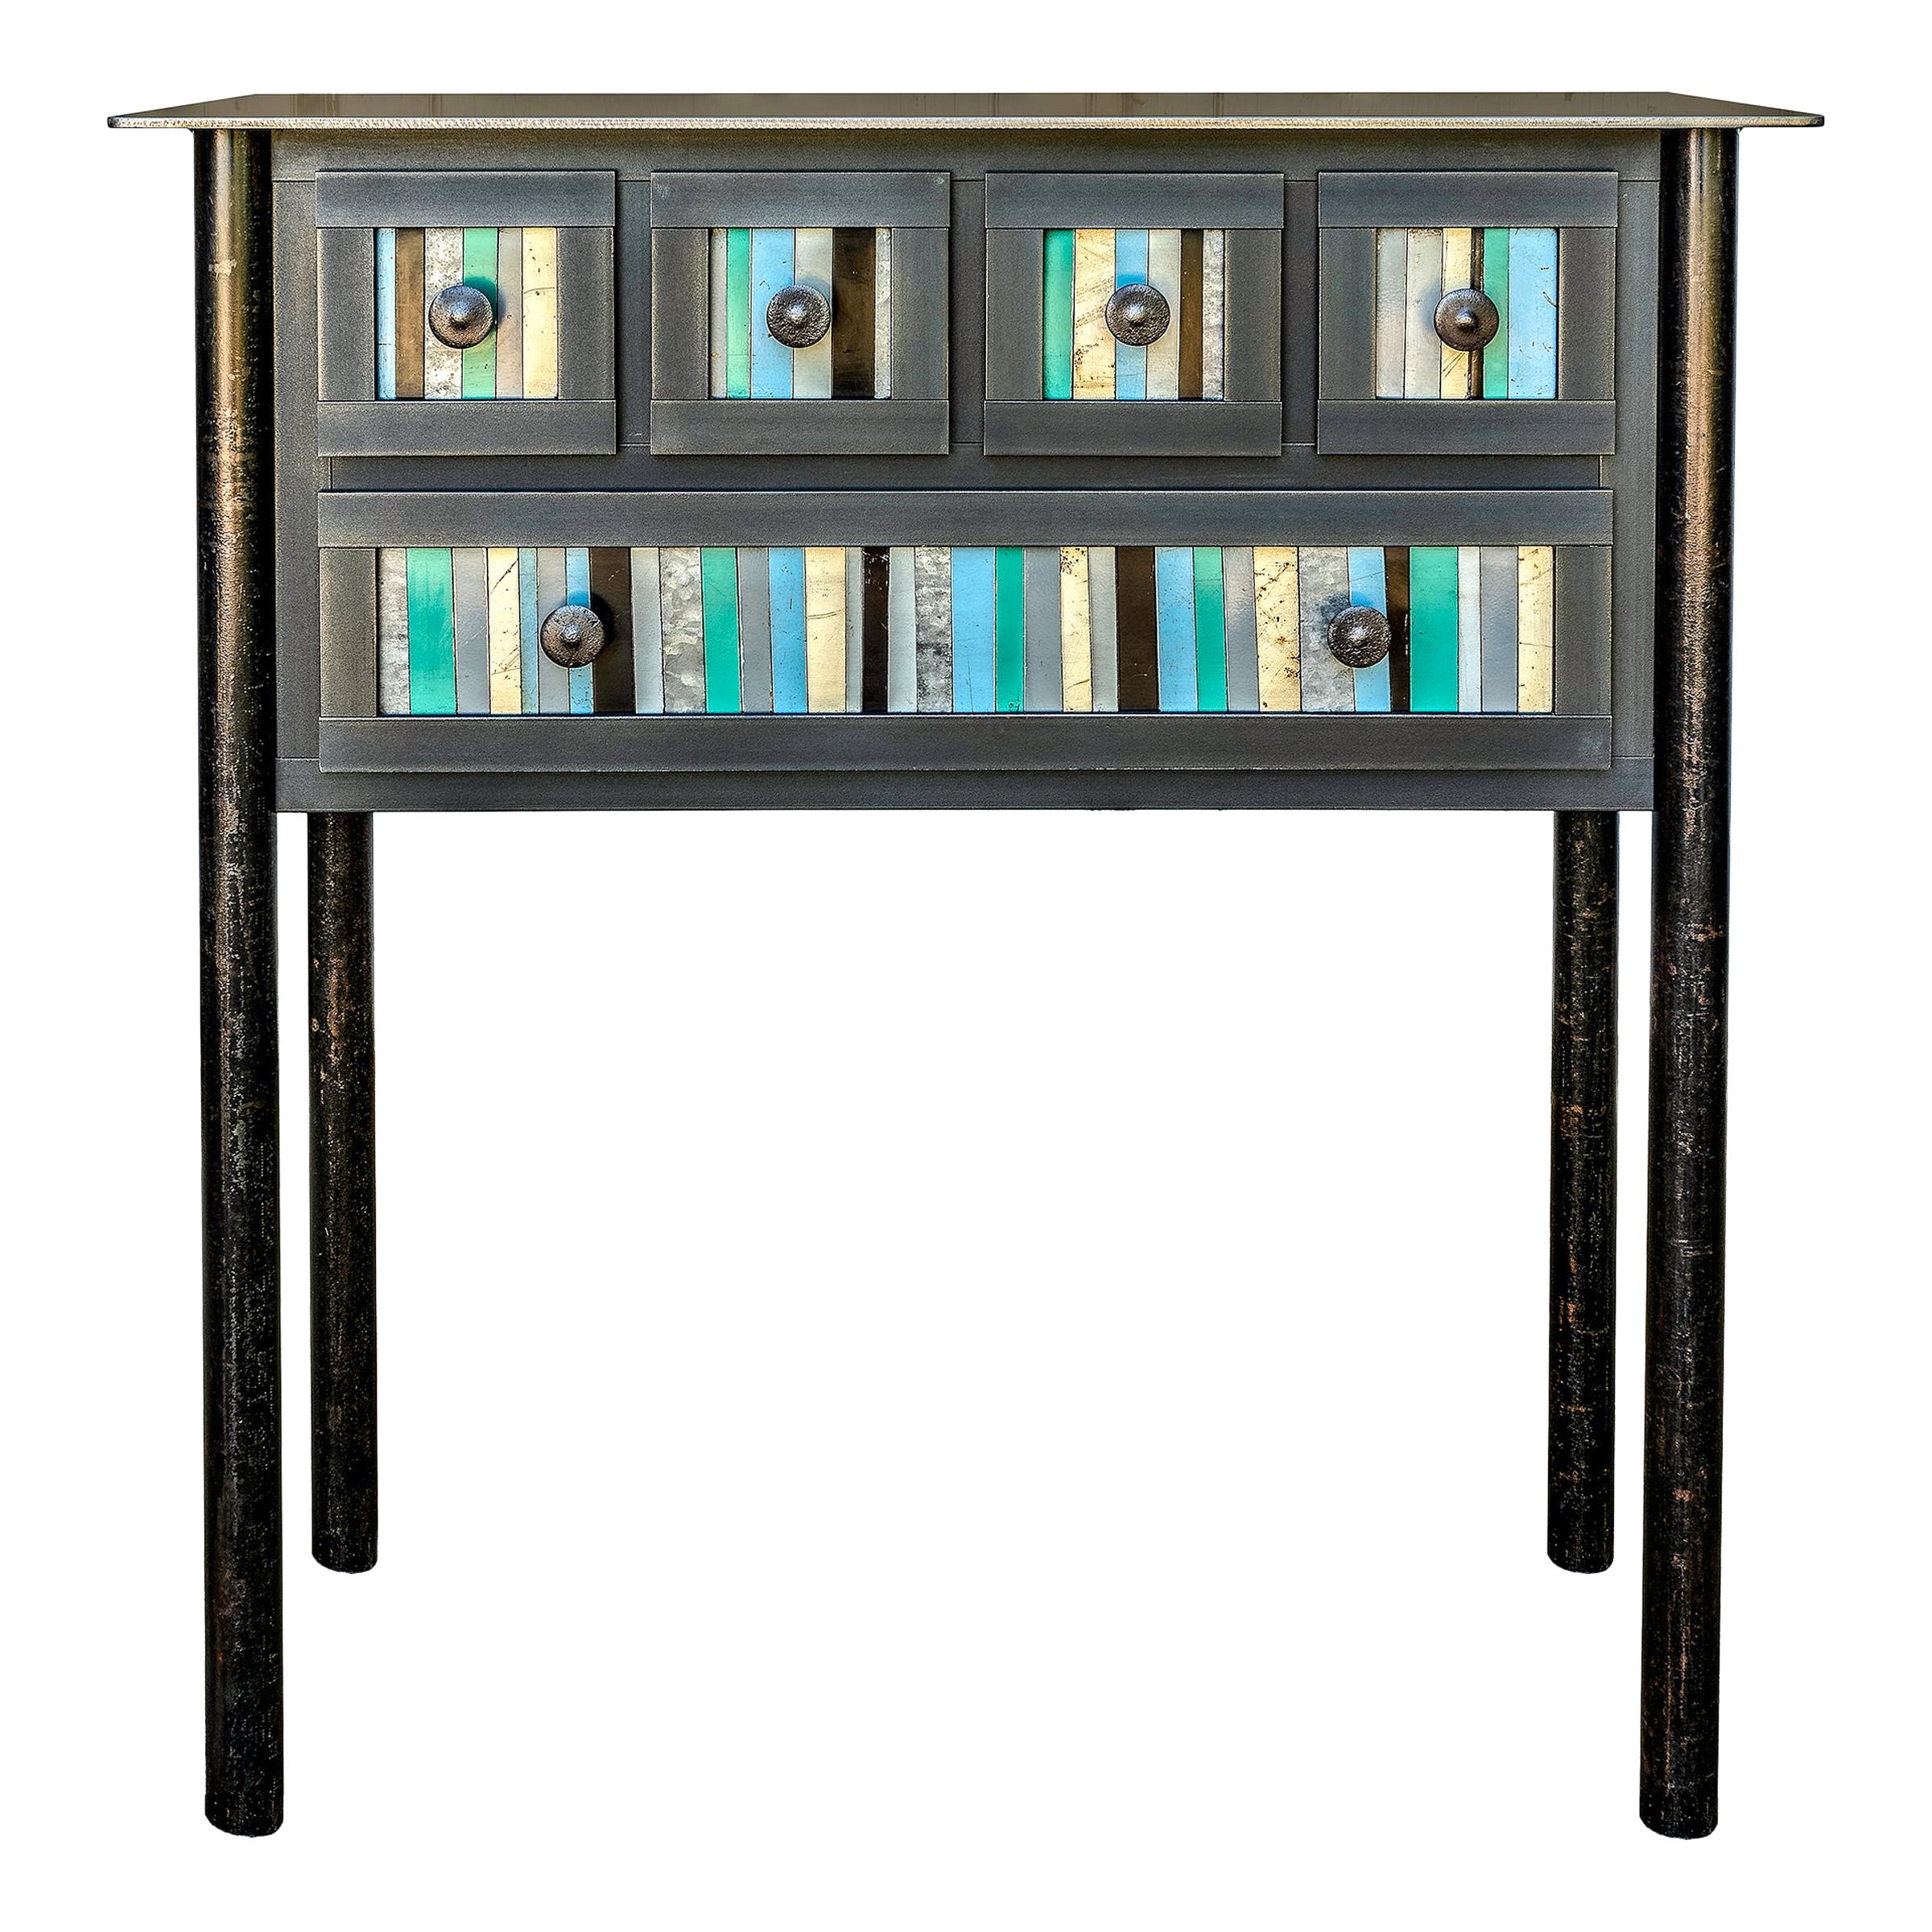 Jim Rose Five-Drawer Strip Quilt Table, Steel Furniture, Found Multicolor Panels